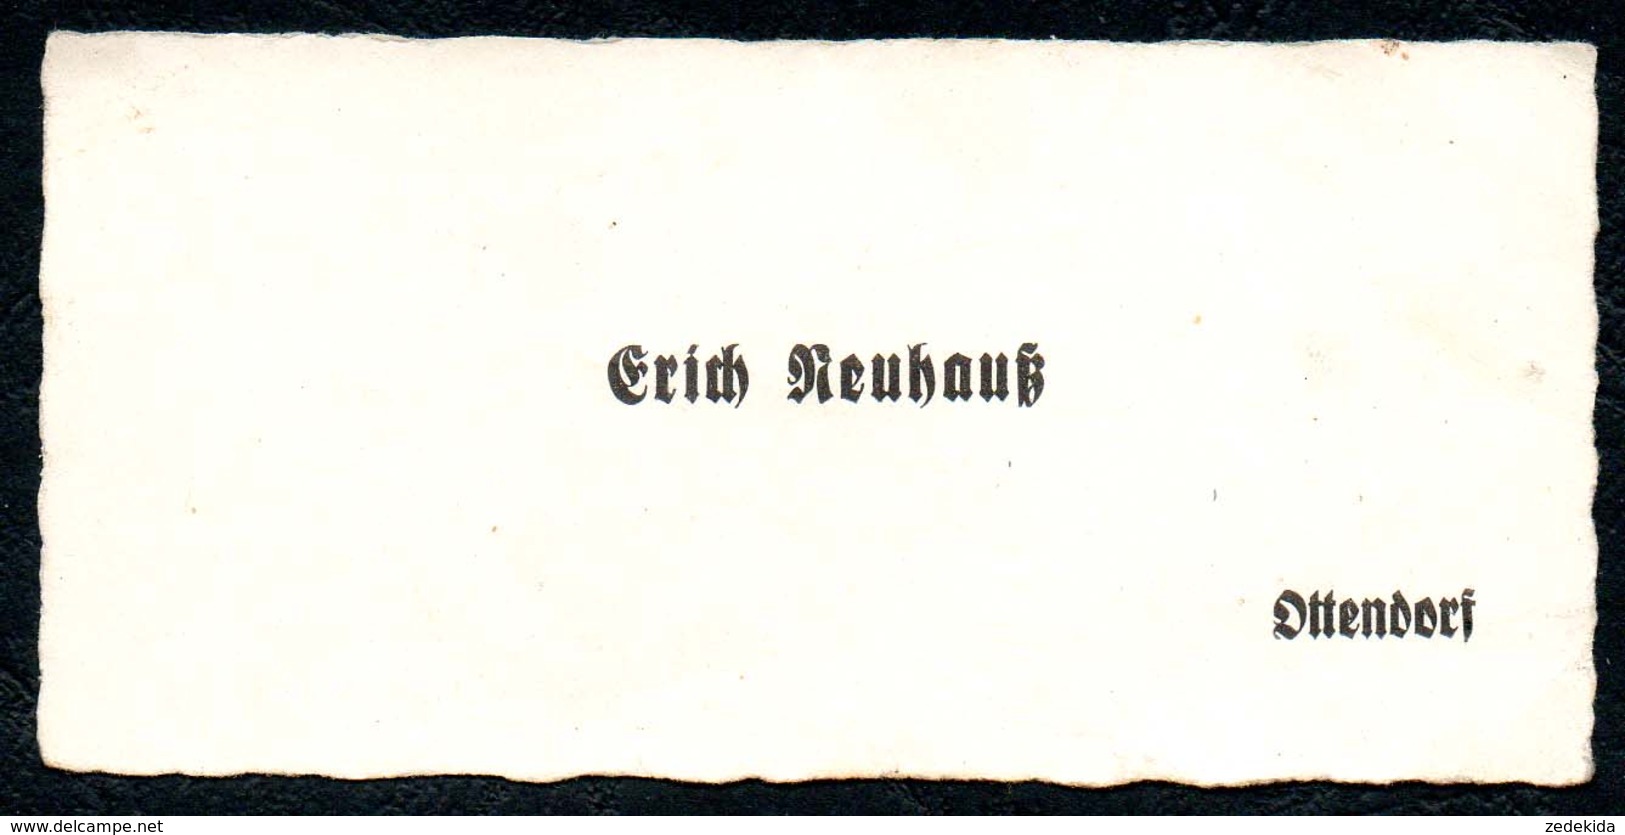 B7288 - Ottendorf - Erich Neuhauß - Visitenkarte - Visitenkarten